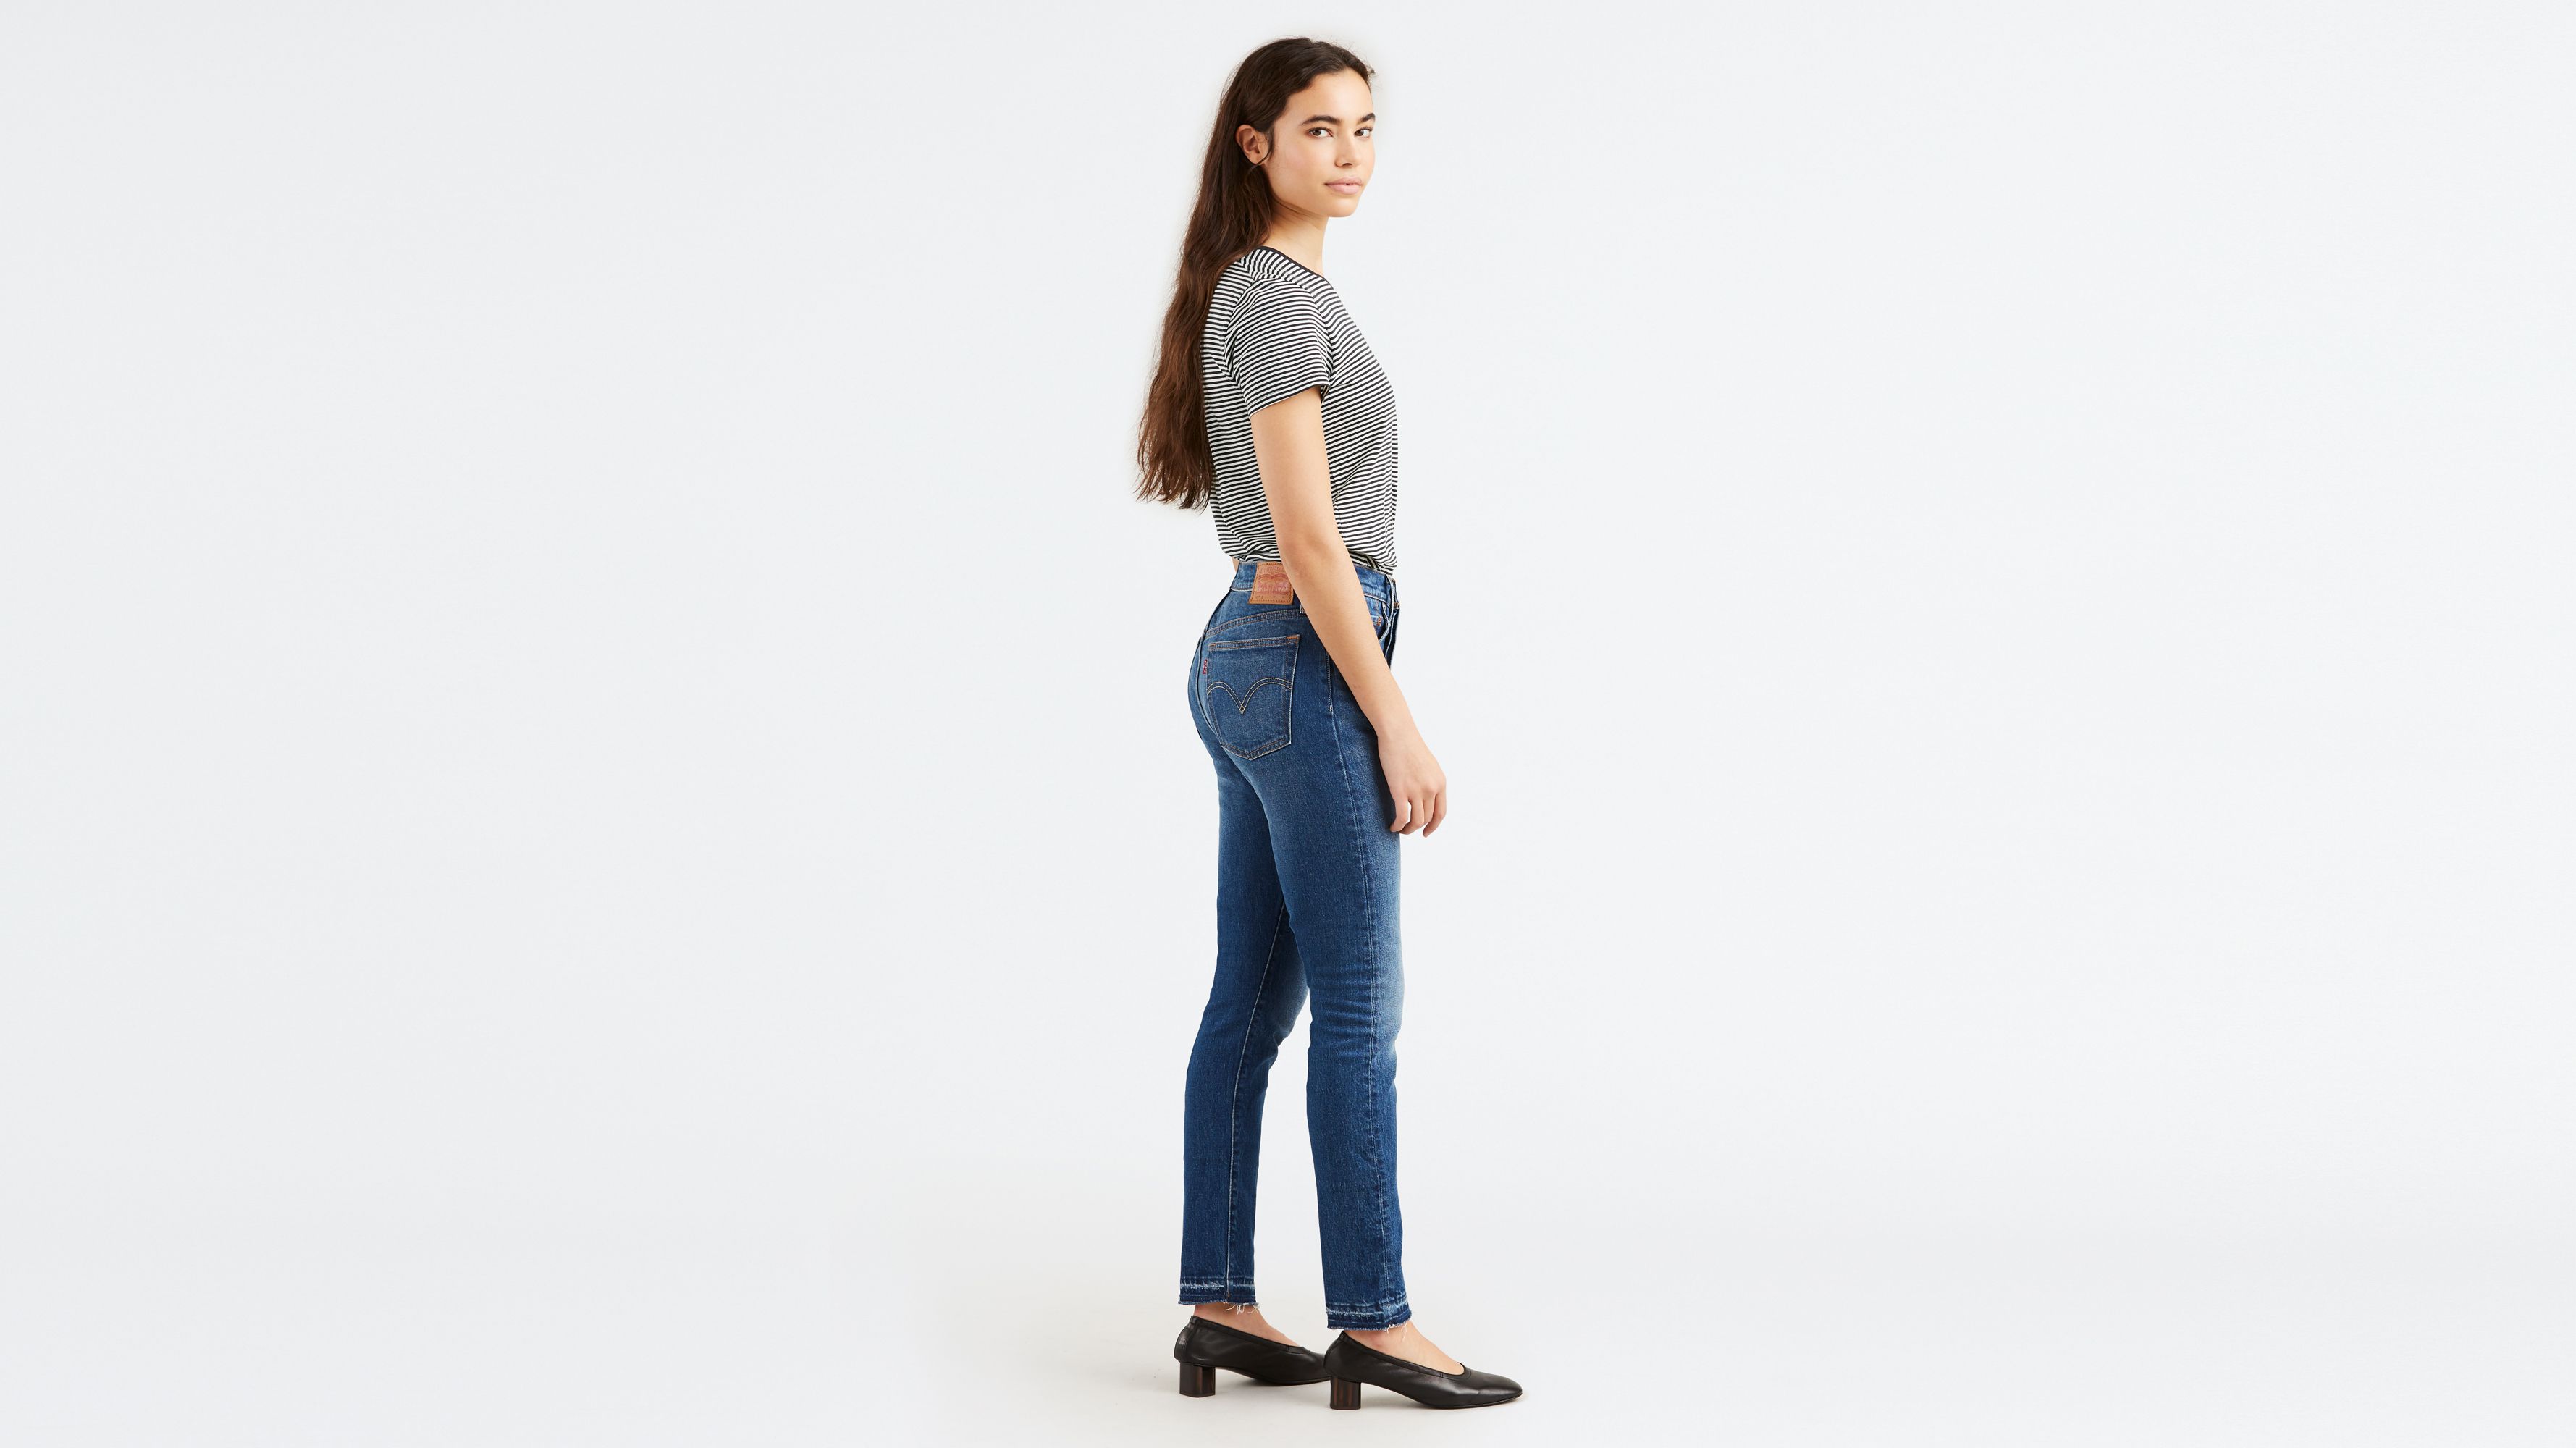 levi's 501 customized skinny jeans